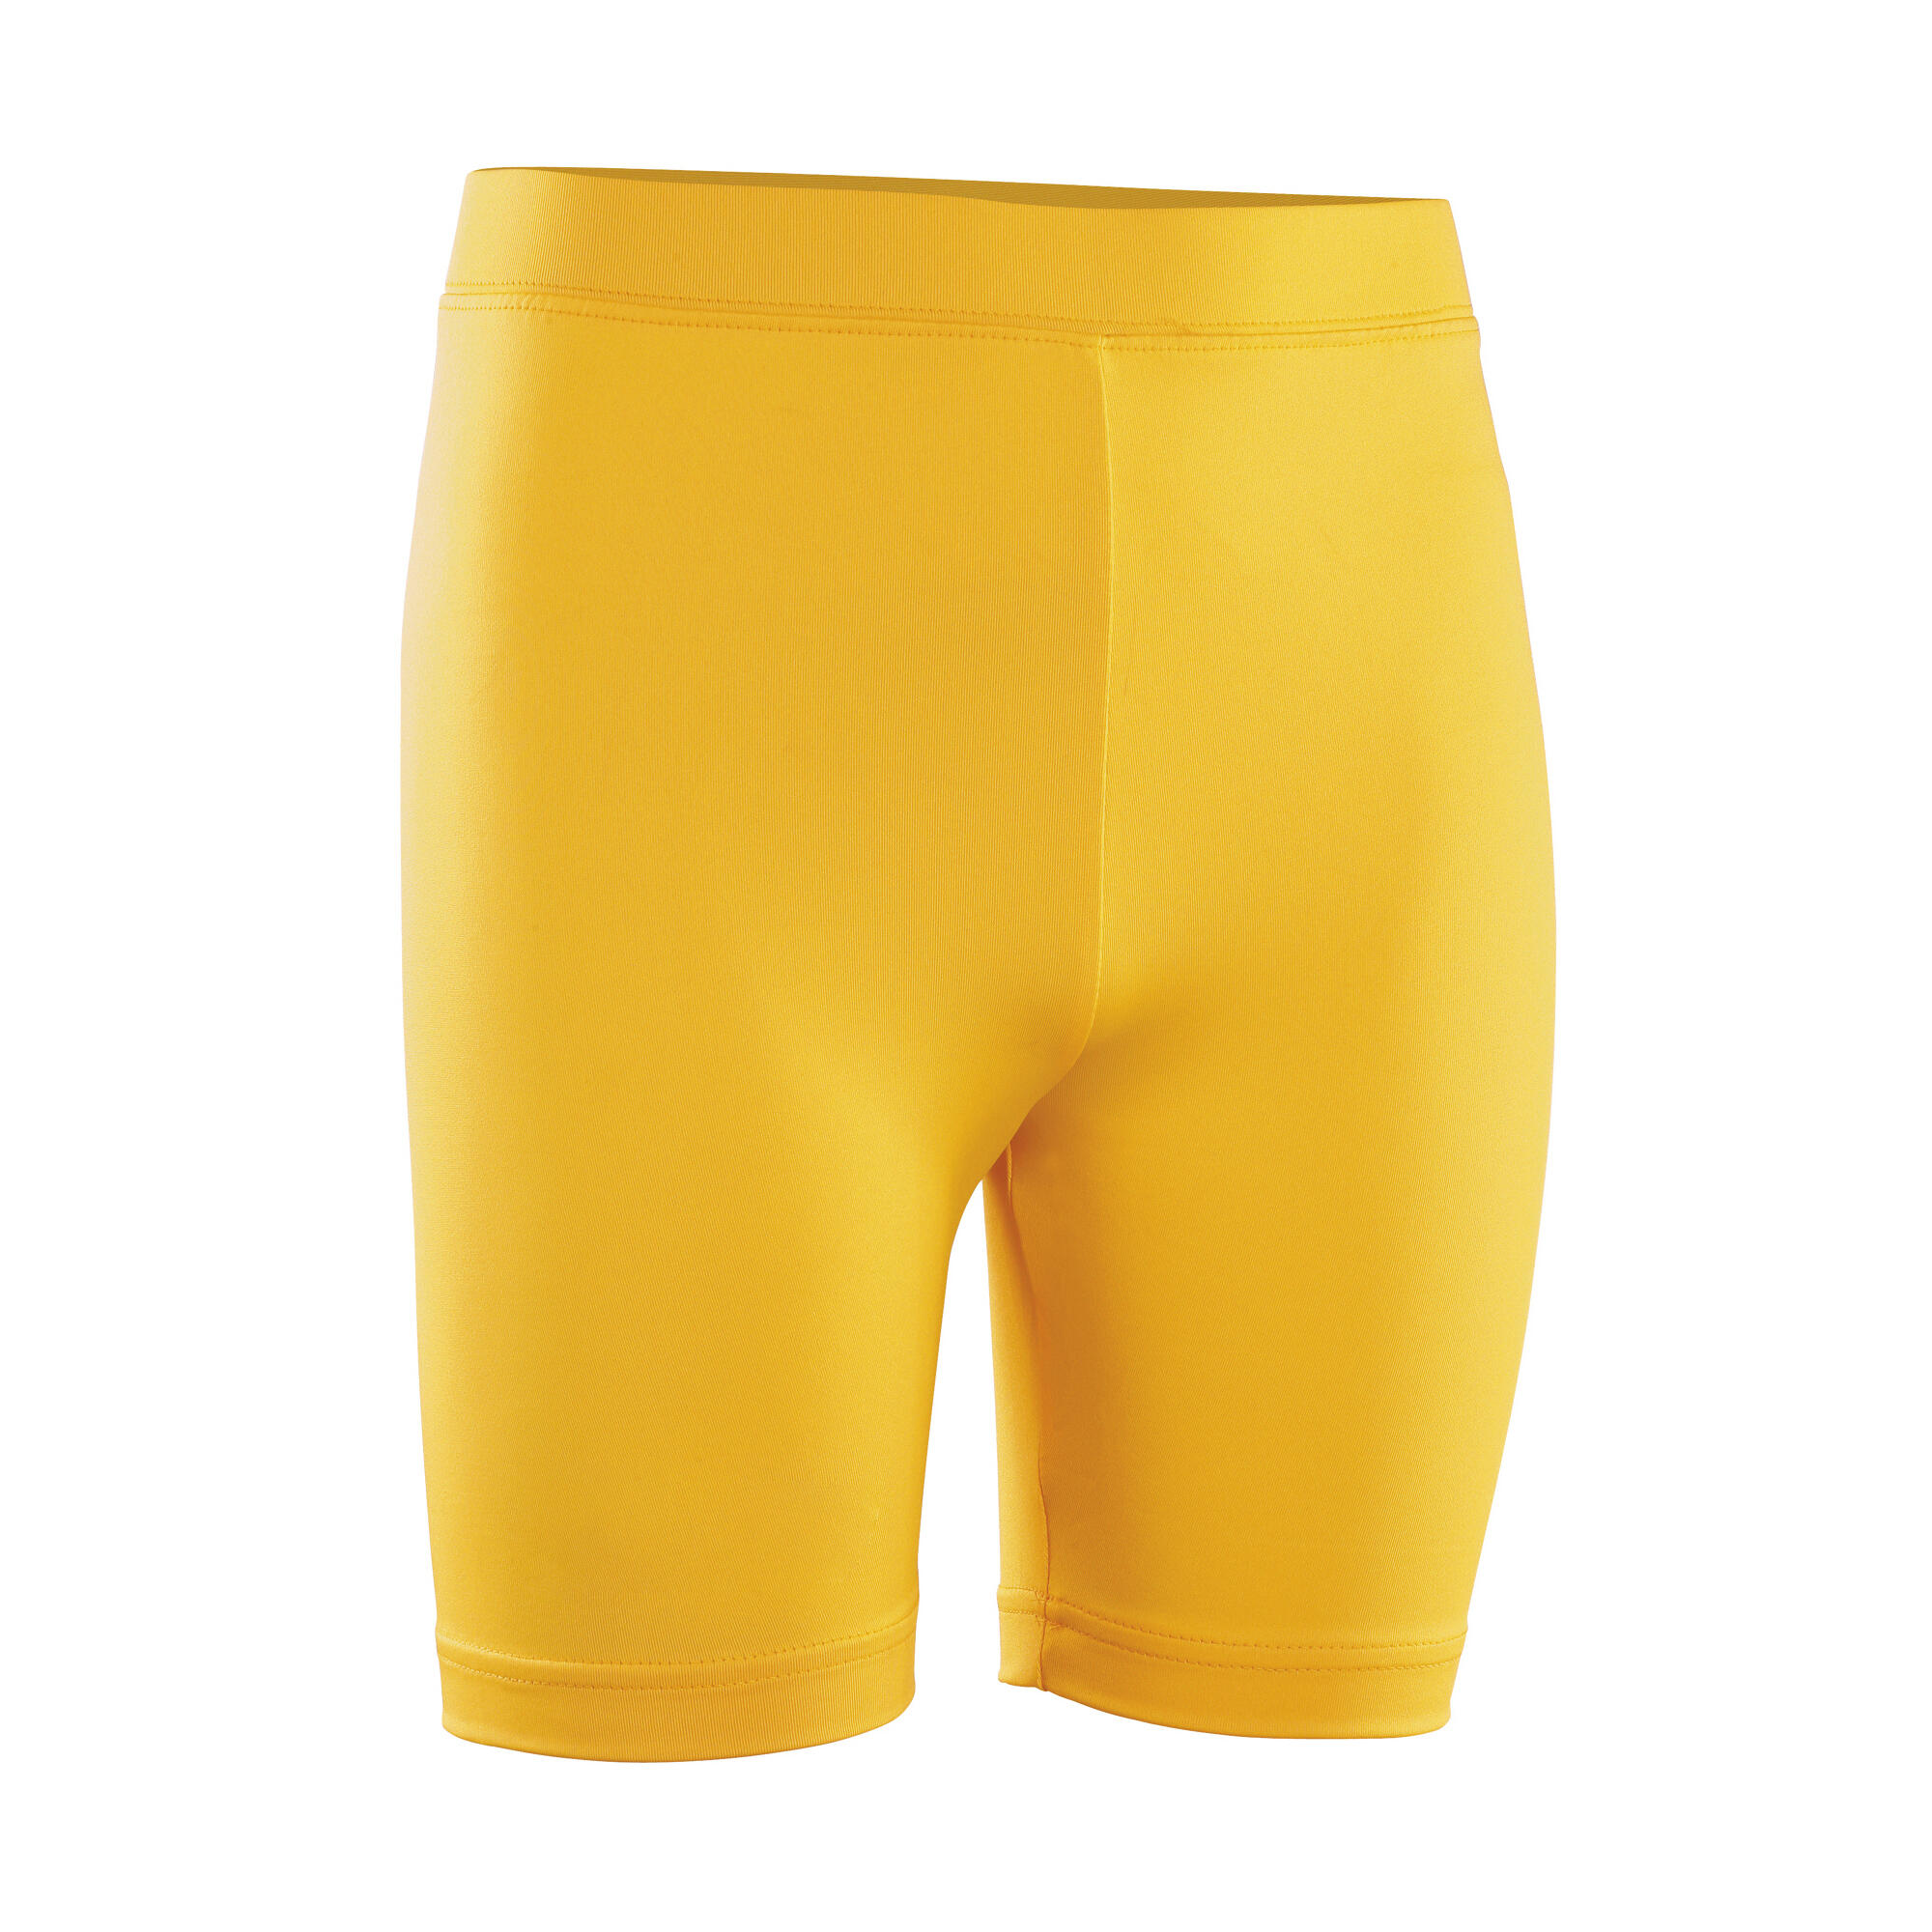 RHINO Childrens Boys Thermal Underwear Sports Base Layer Shorts (Royal)